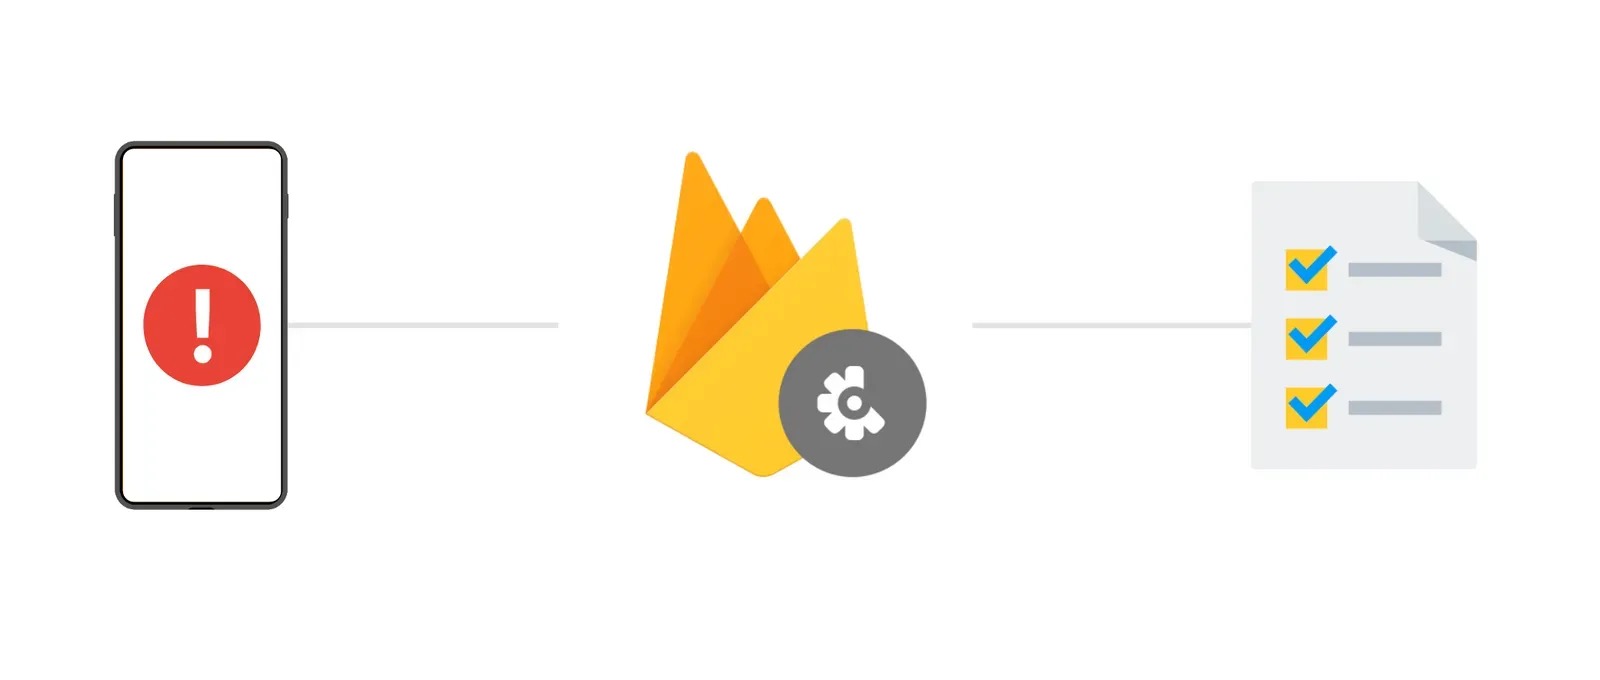 △ Firebase 与 Flutter 无缝结合，助力您构建高质量的应用，以最少的工作量和代码触及多个平台的用户